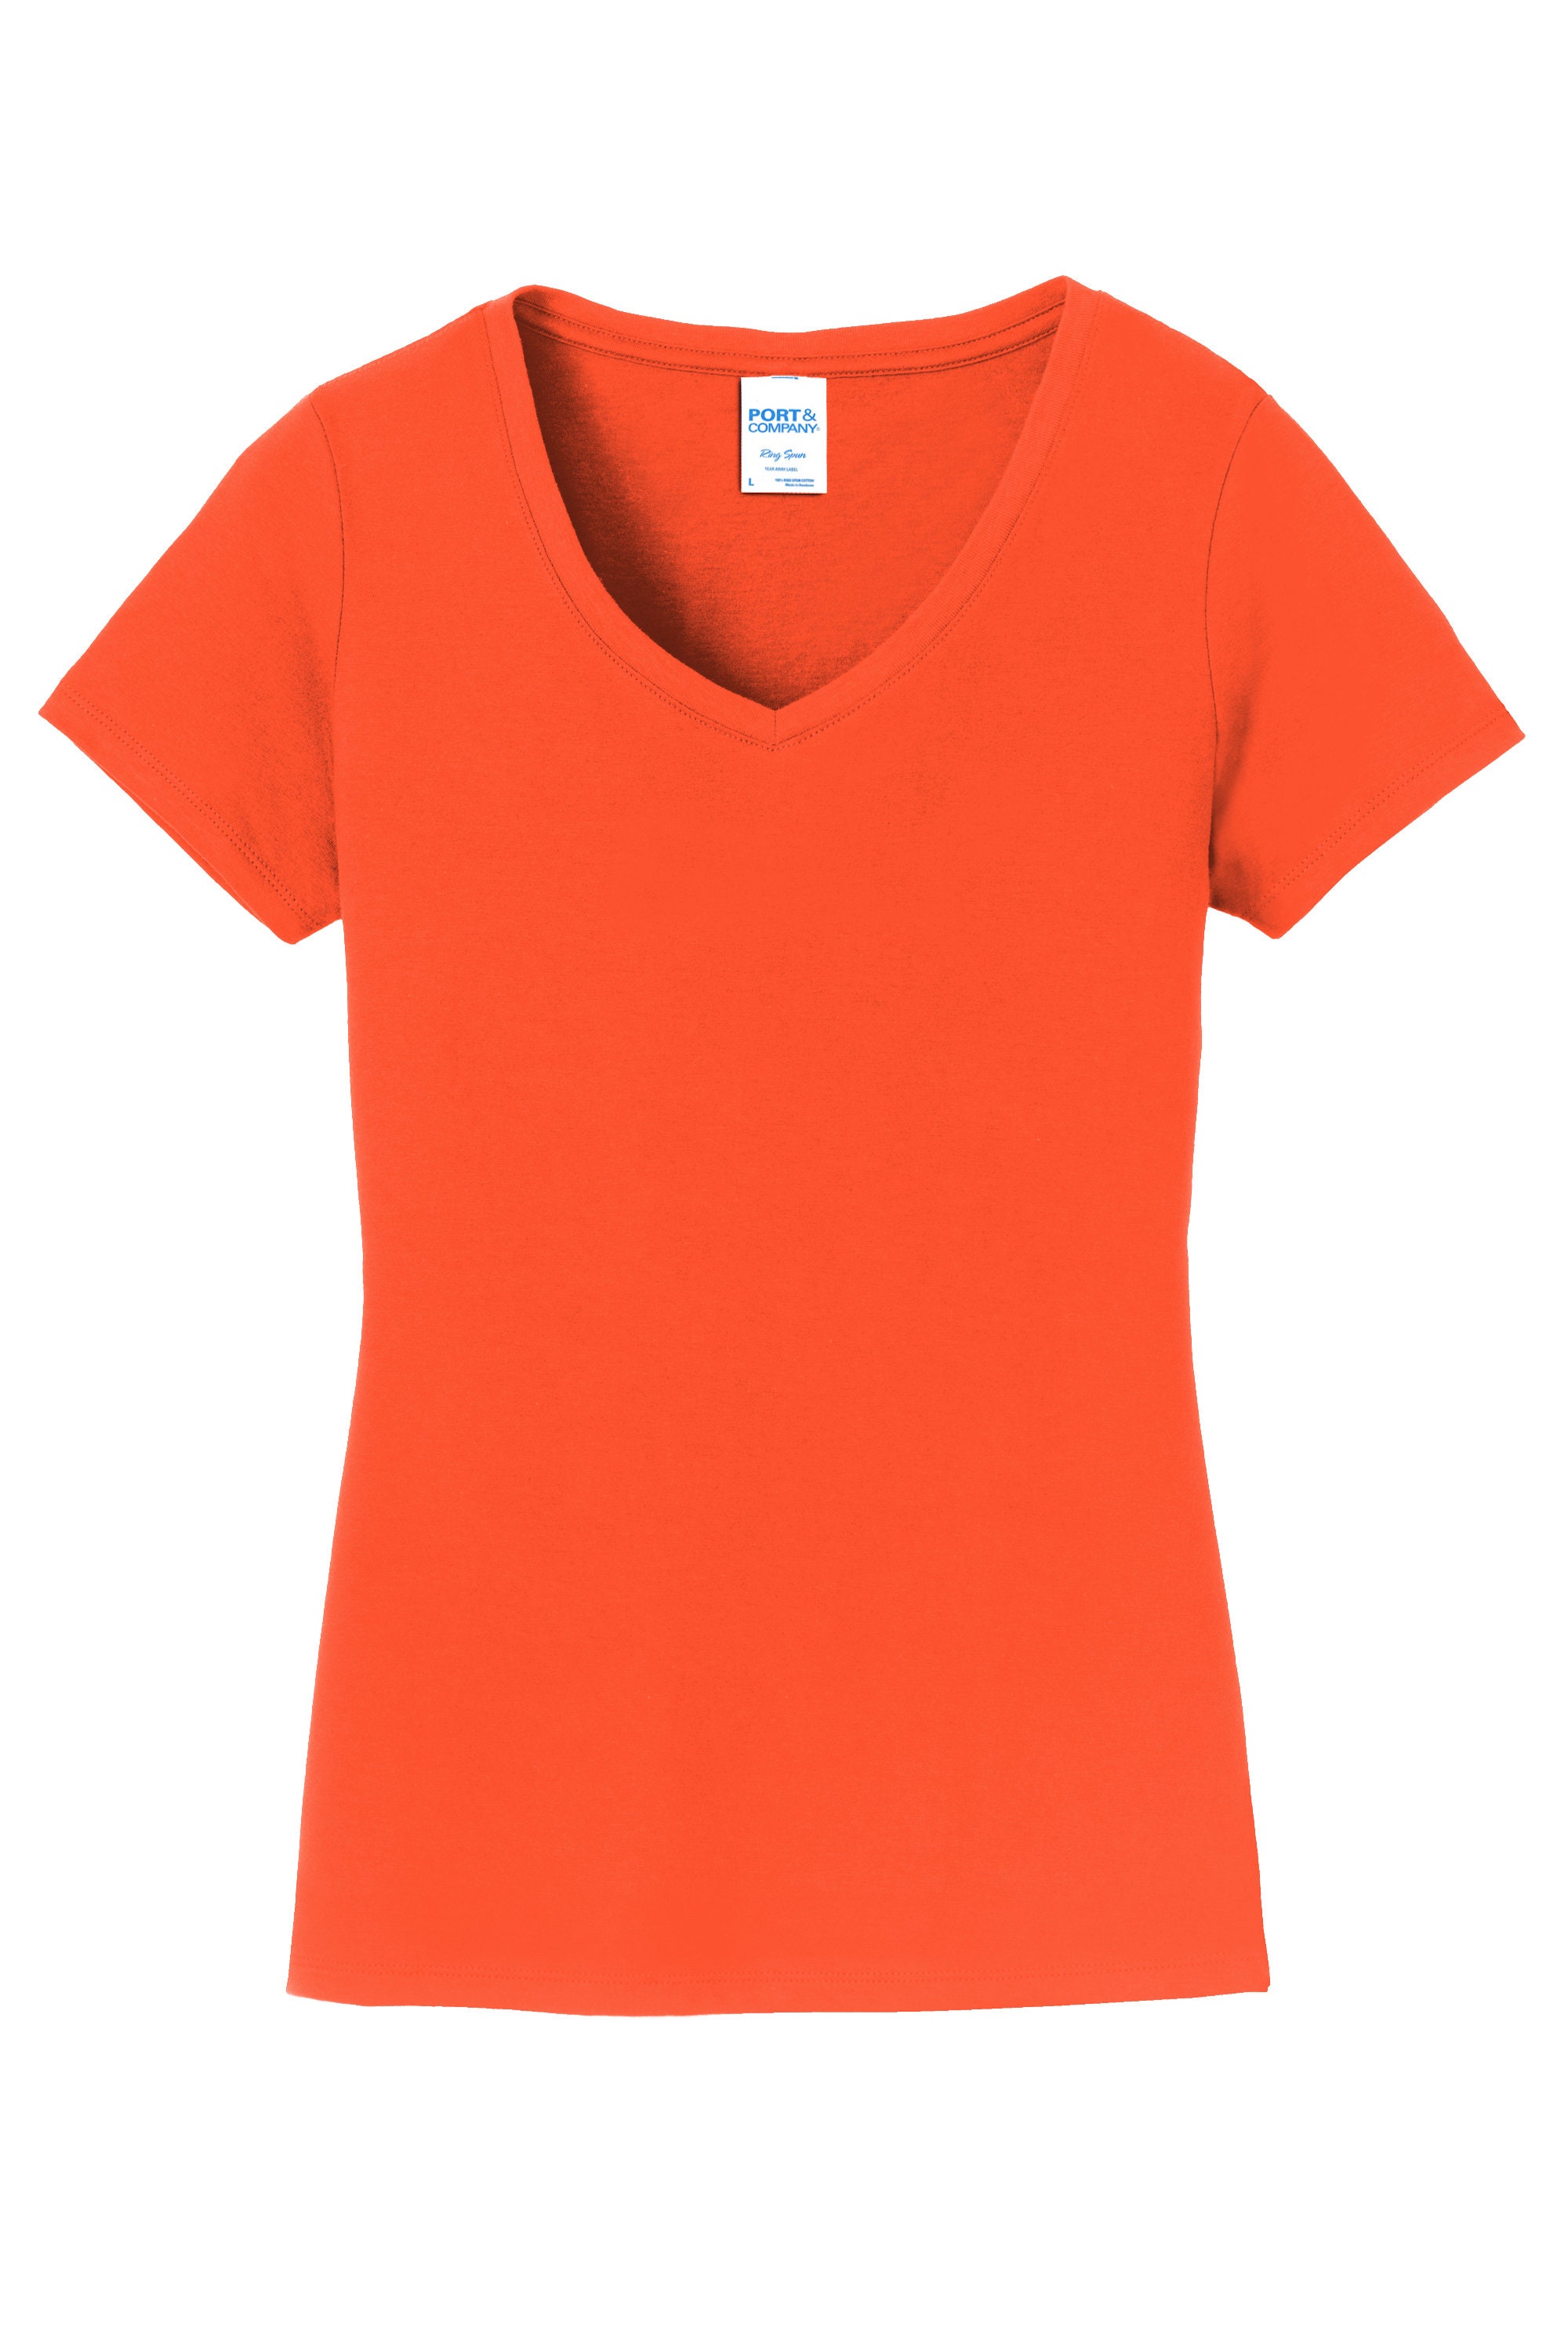 Women's Post Shoulder Surgery Shirt W/ Snaps or Hook & Loop 